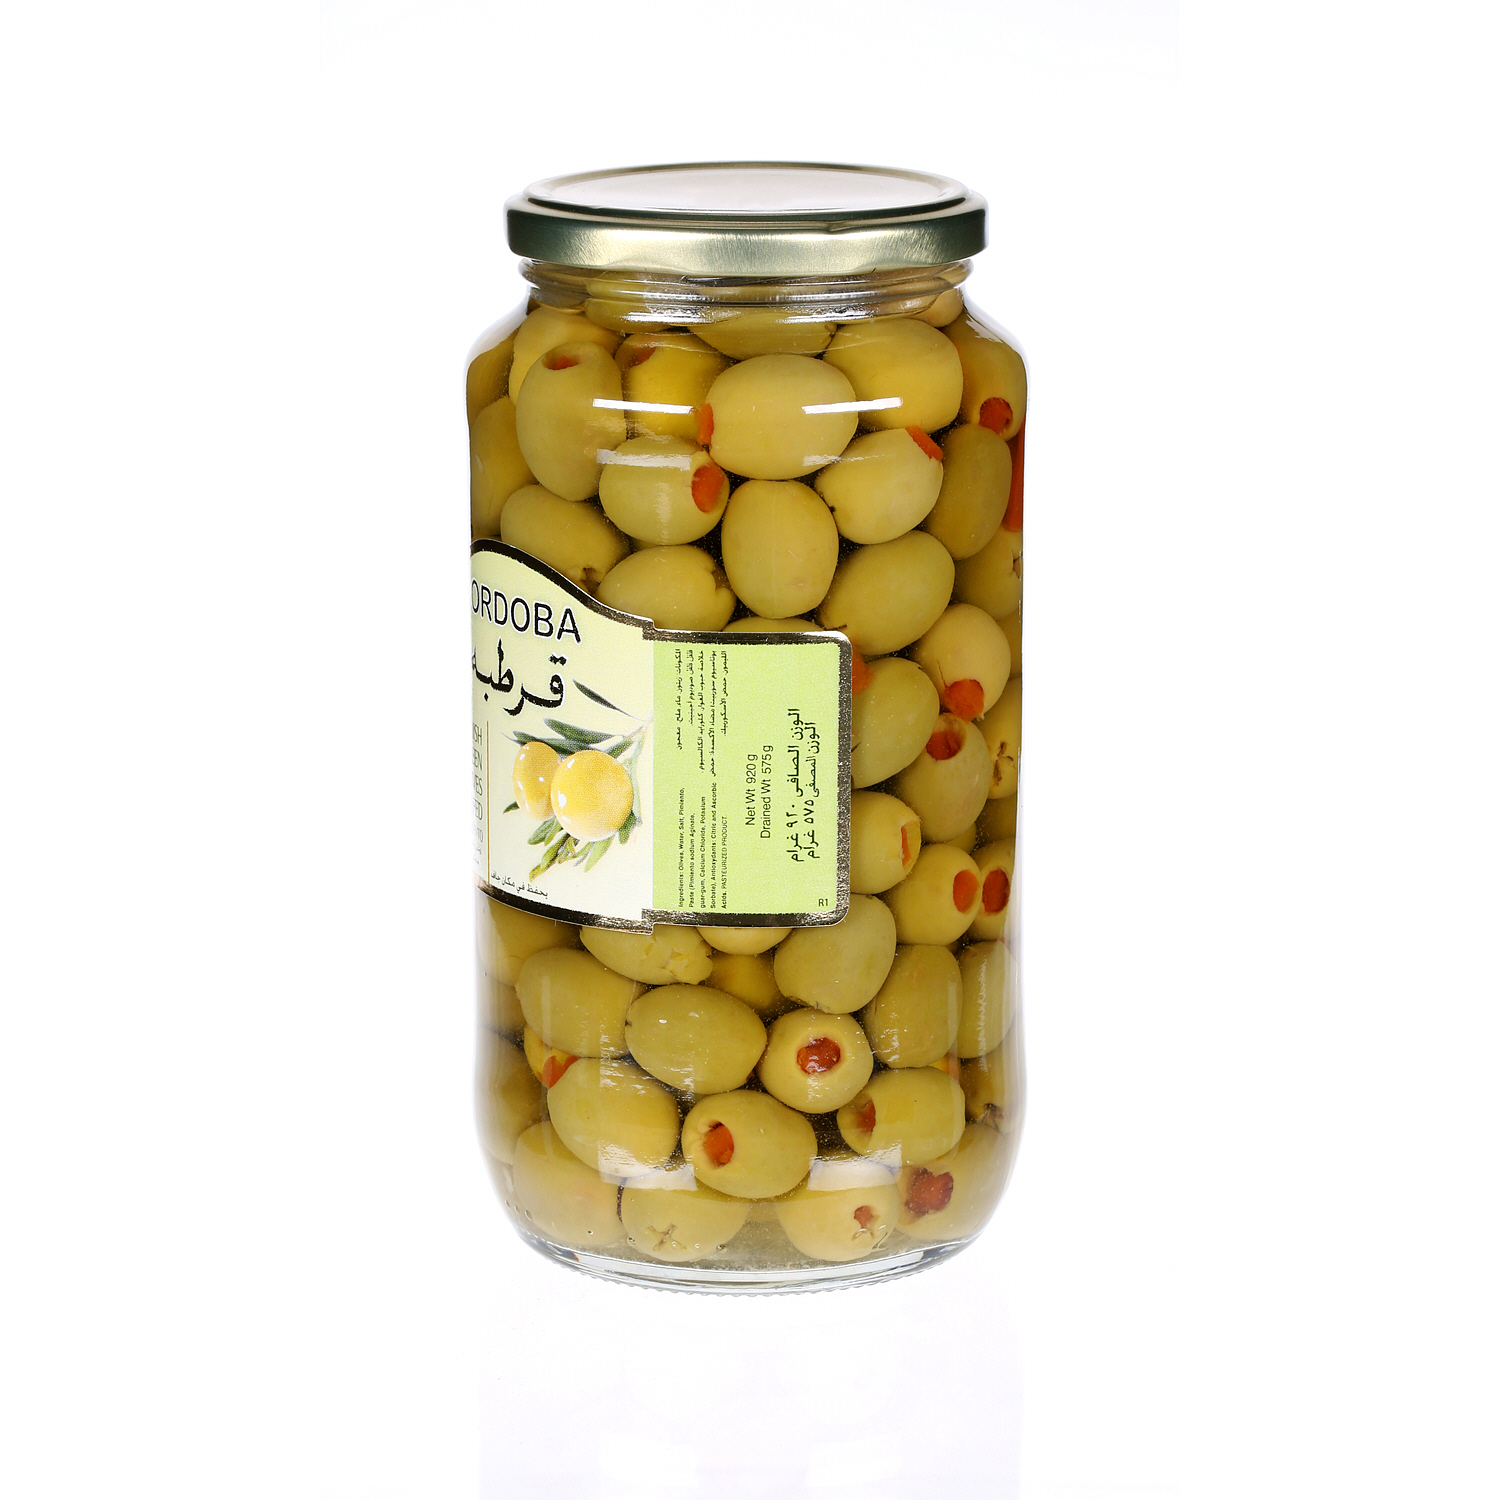 Cordoba Stuffed Spanish Green Olives 575 g